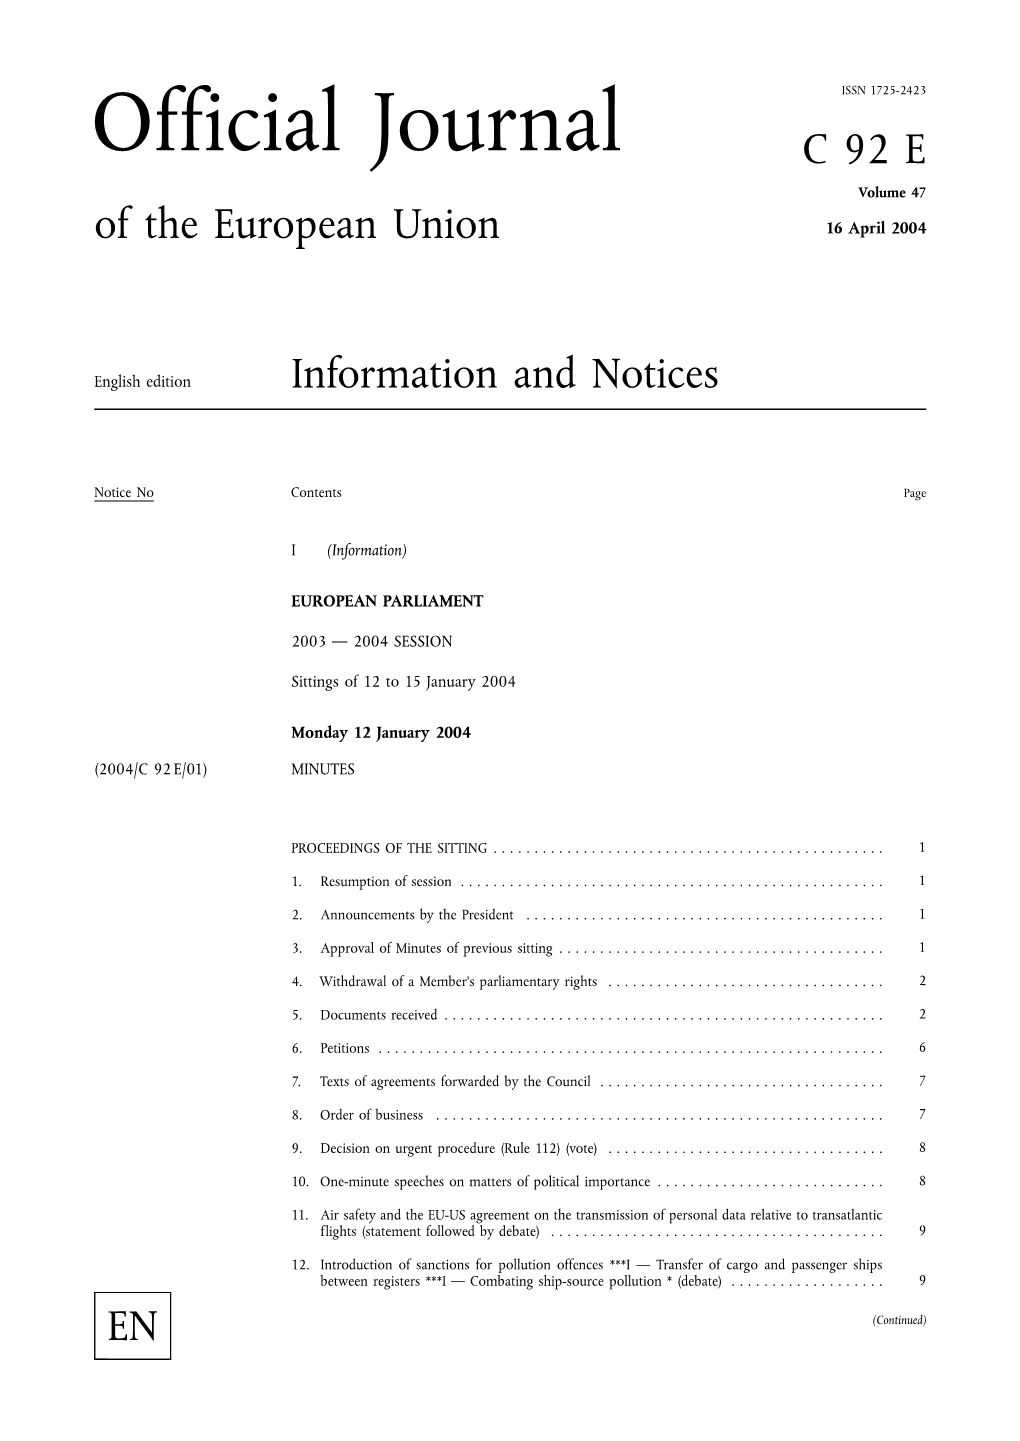 Official Journal C92E Volume 47 of the European Union 16 April 2004